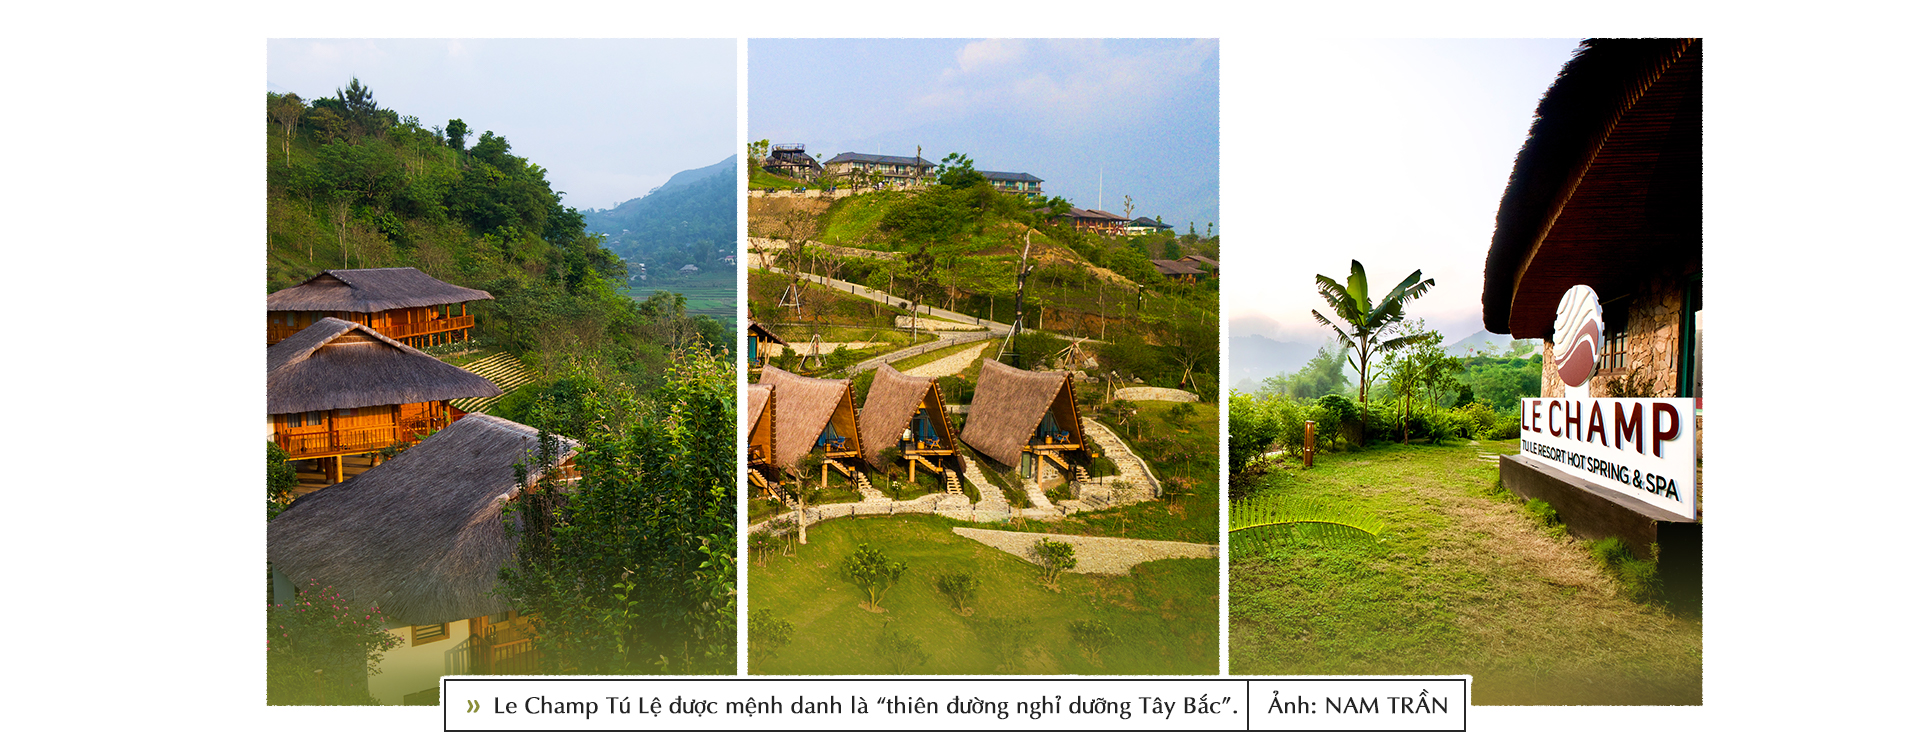 Different views of Le Champ Tu Le Resort Hot Spring & Spa in Van Chan District, Yen Bai Province, Vietnam. Photo: Nam Tran / Tuoi Tre